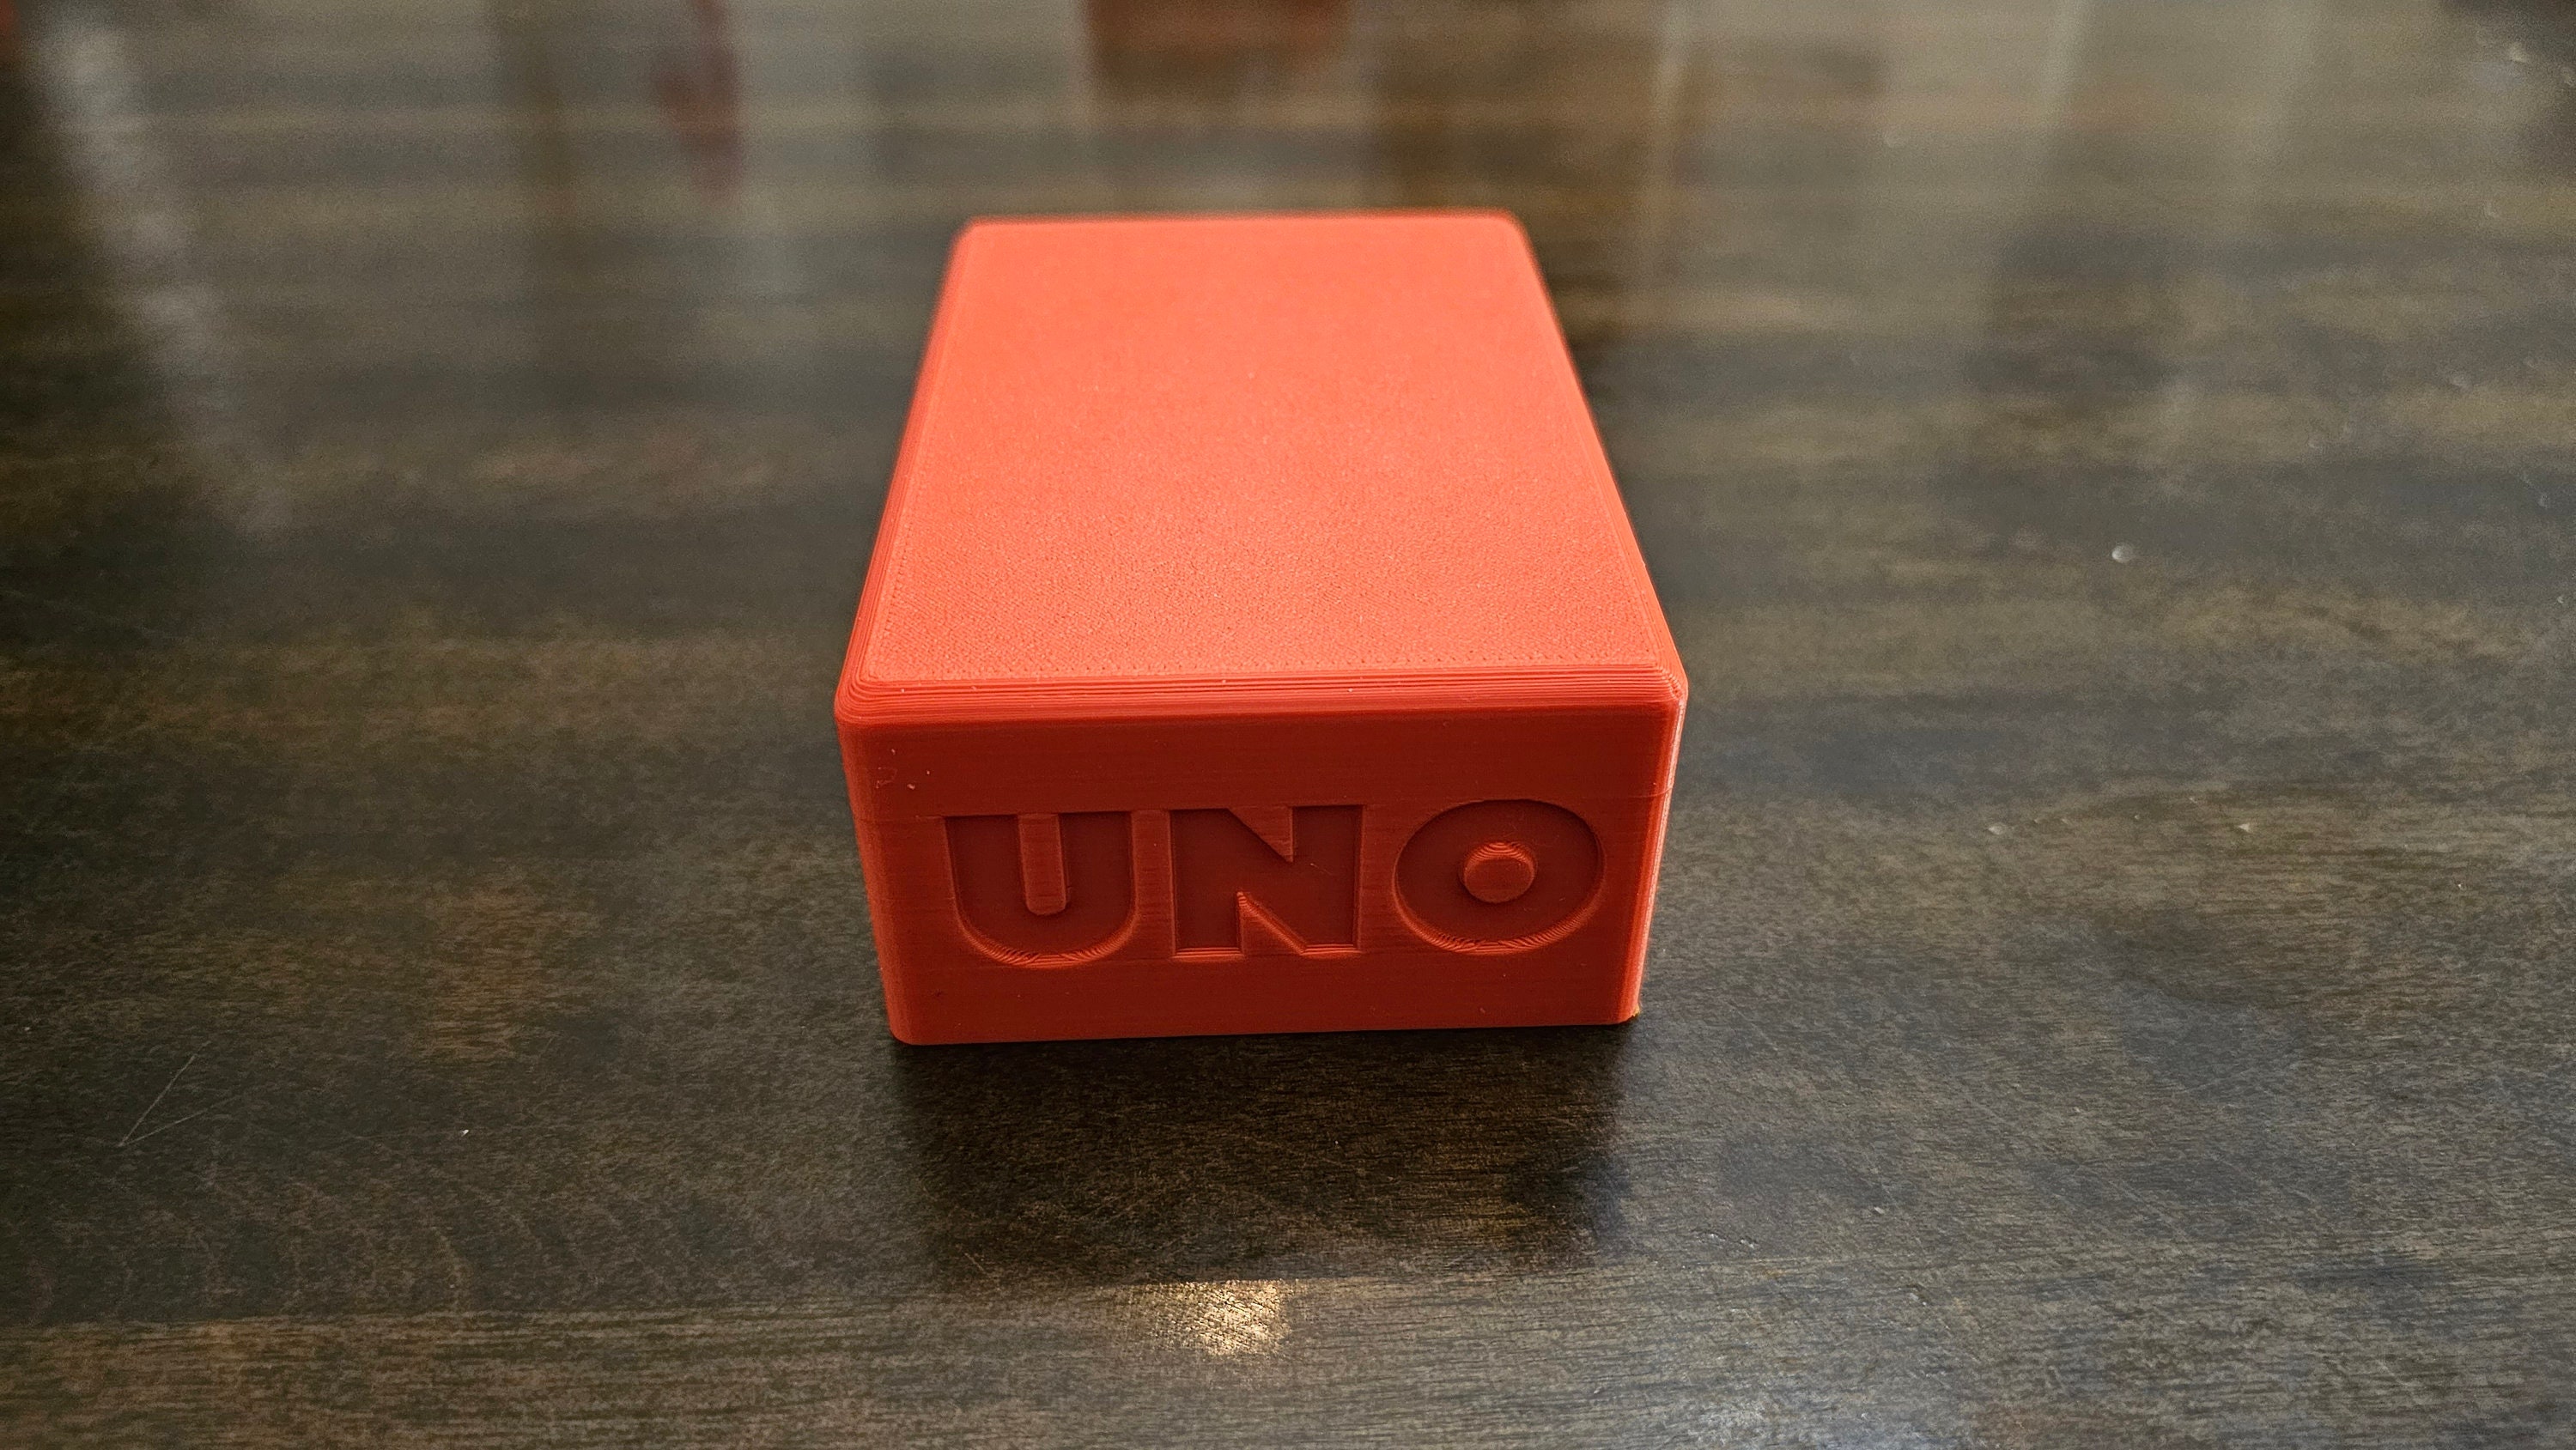 UNO Flip - The Toy Box Hanover